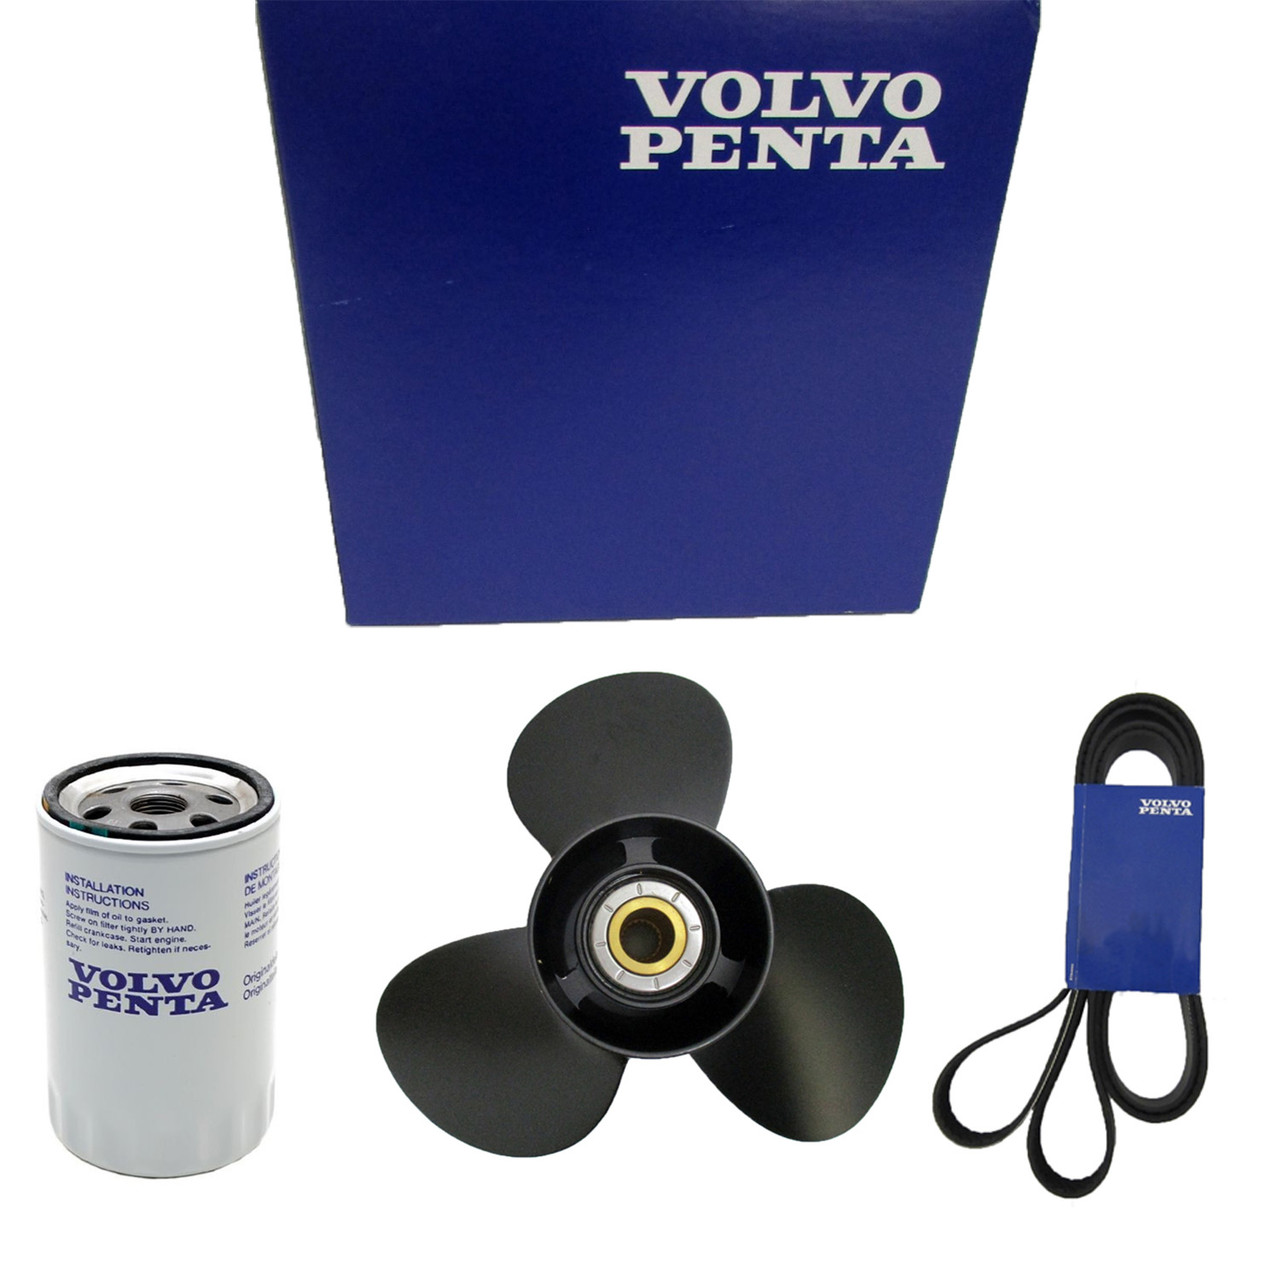 Volvo Penta New OEM Filter Cap, 21746579